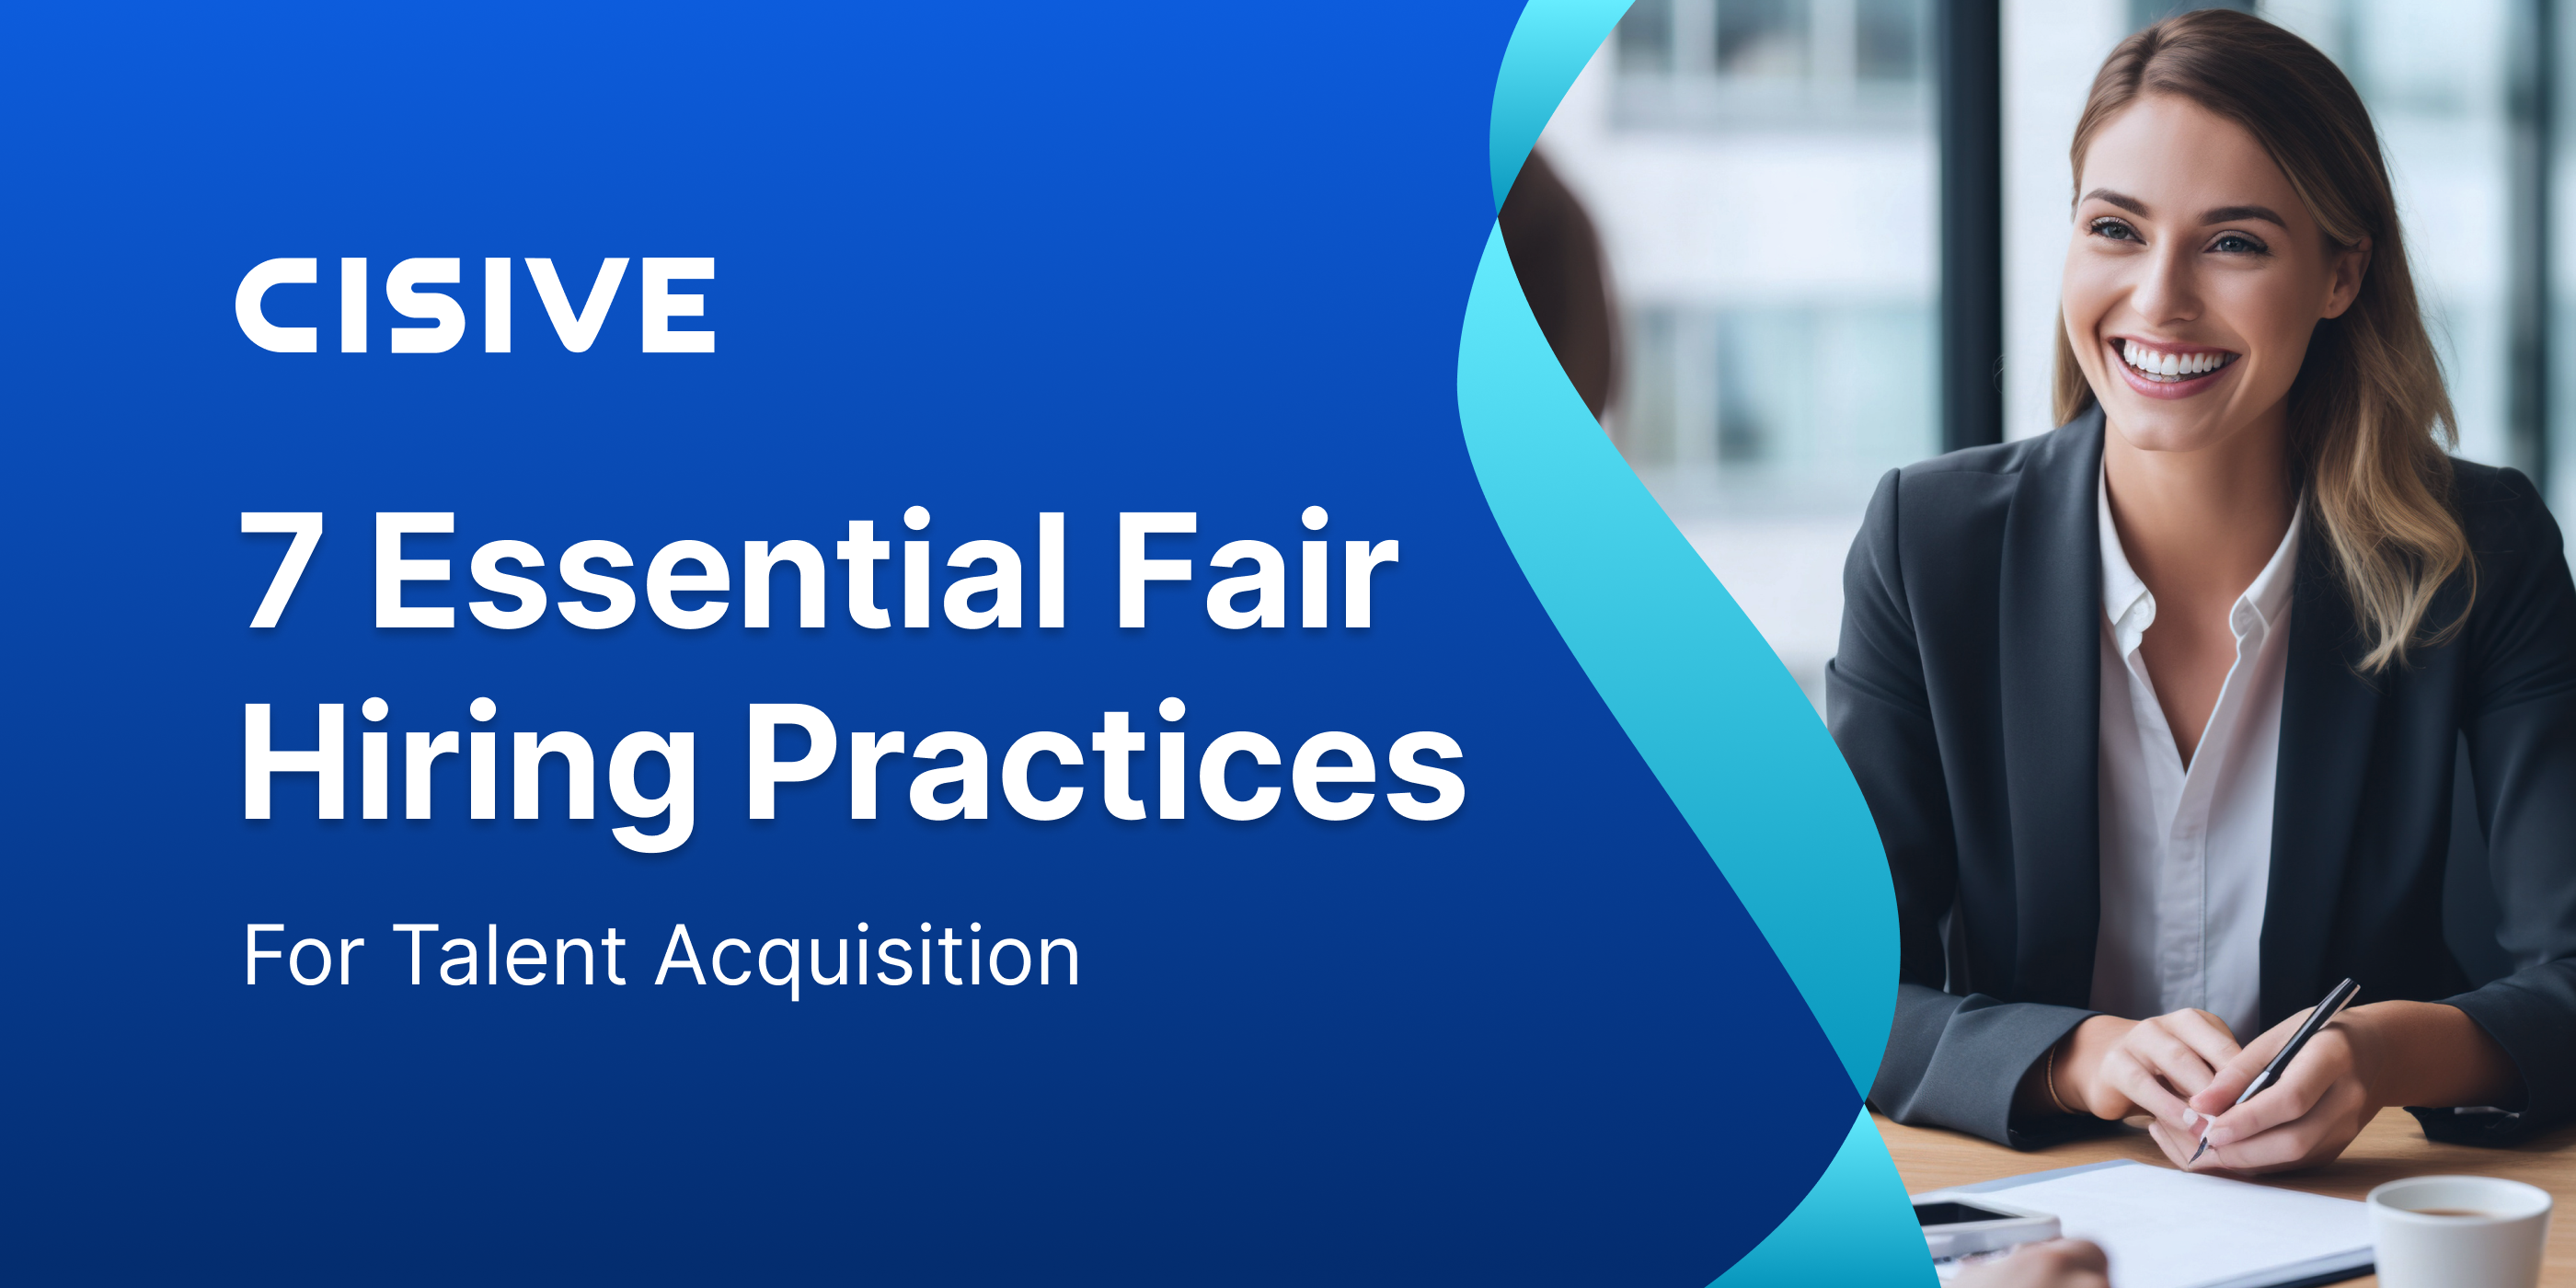 7 Essential Fair Hiring Practices for Talent Acquisition